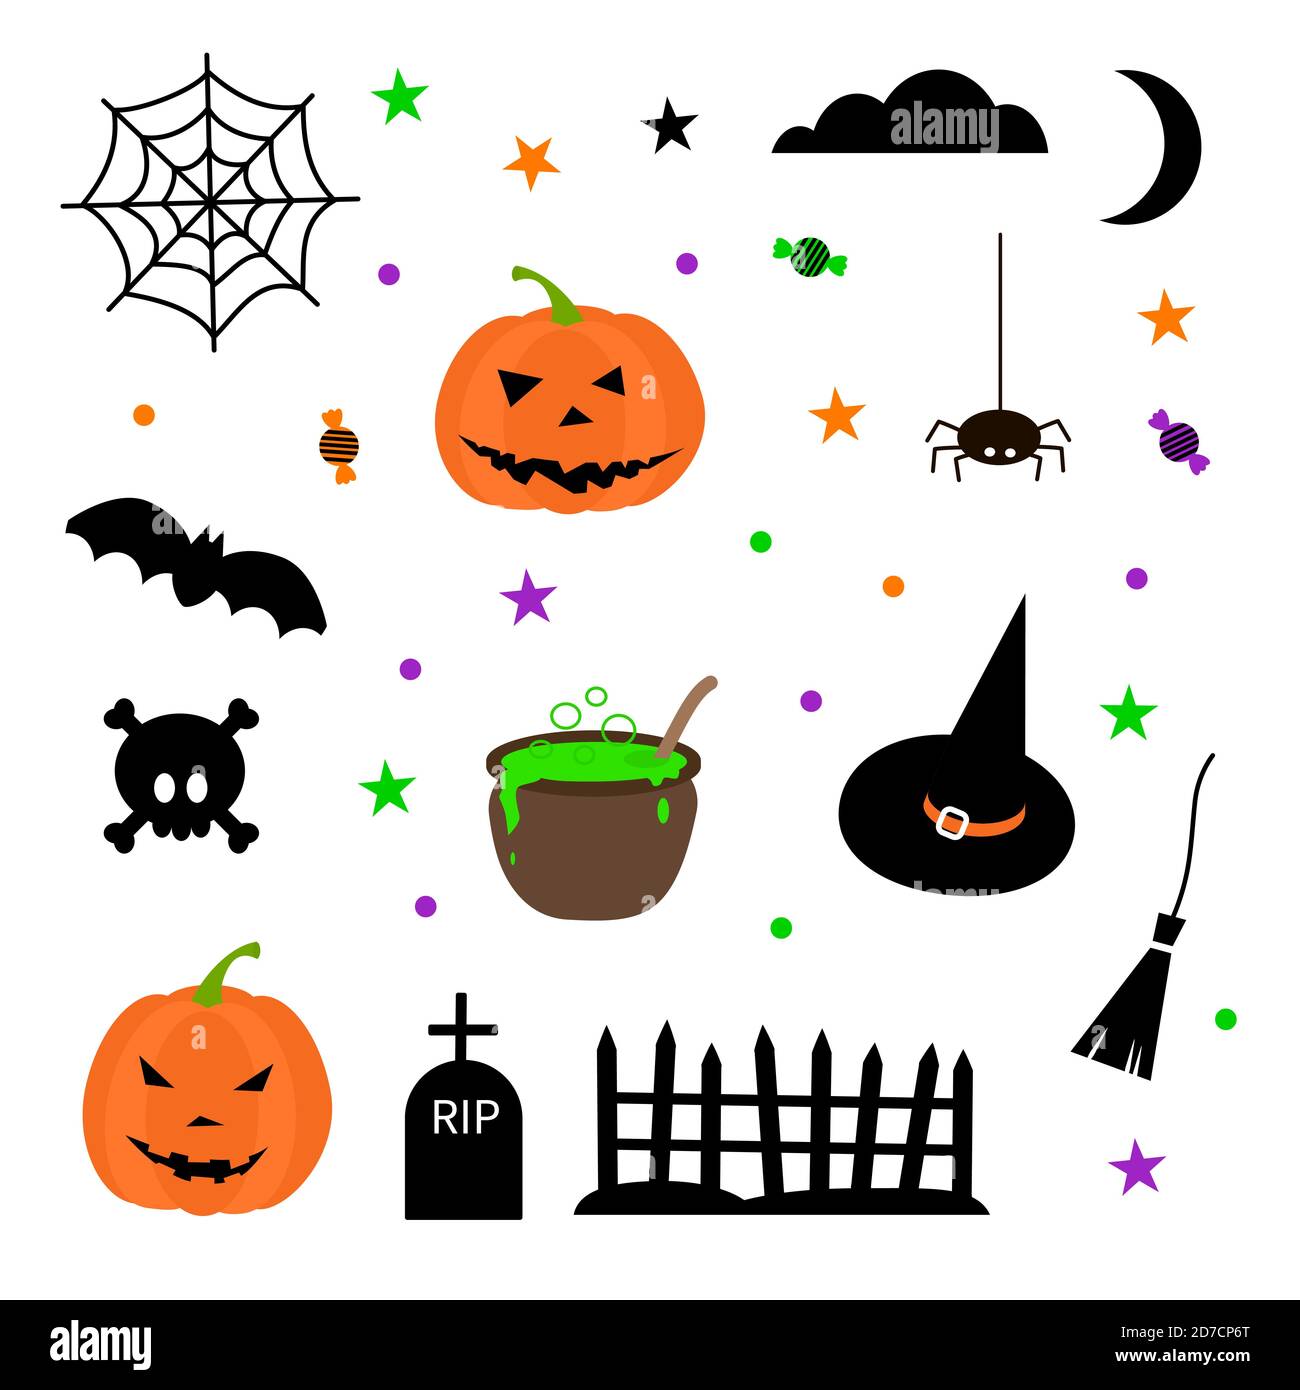 Happy Halloween elements set - brooms spider web skull bones, graves, fence, pumpkin, moon, cloud, bat, spider, witch hat. Stock vector illustration Stock Vector